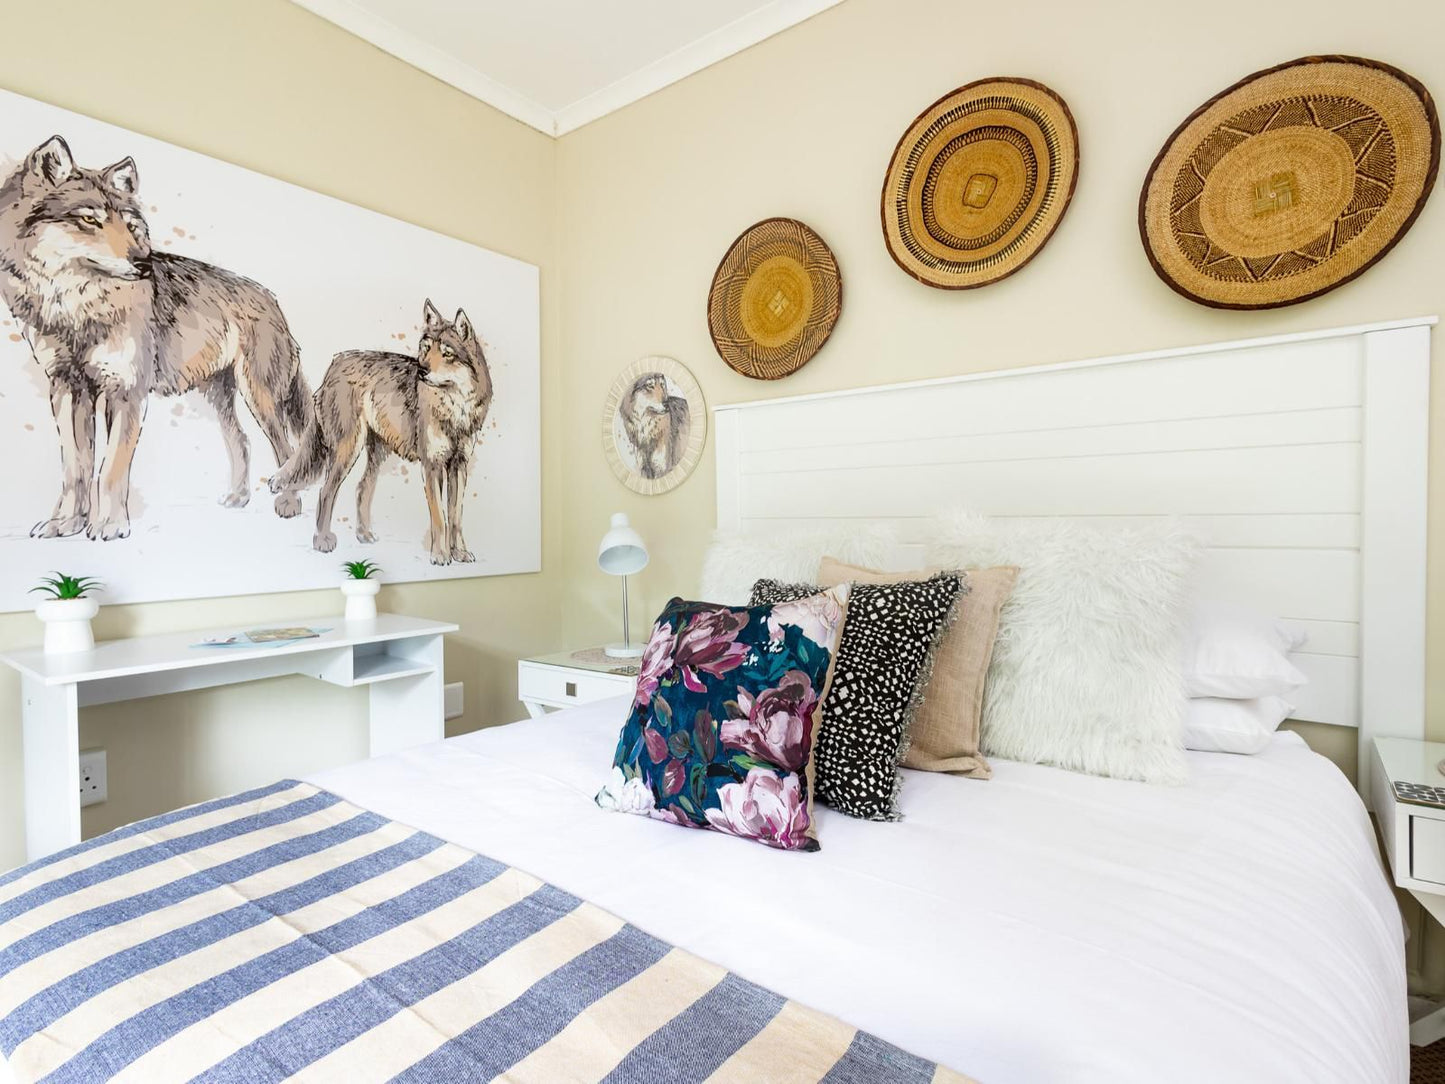 Wolfe Krantz West Acres Central Nelspruit Mpumalanga South Africa Bedroom